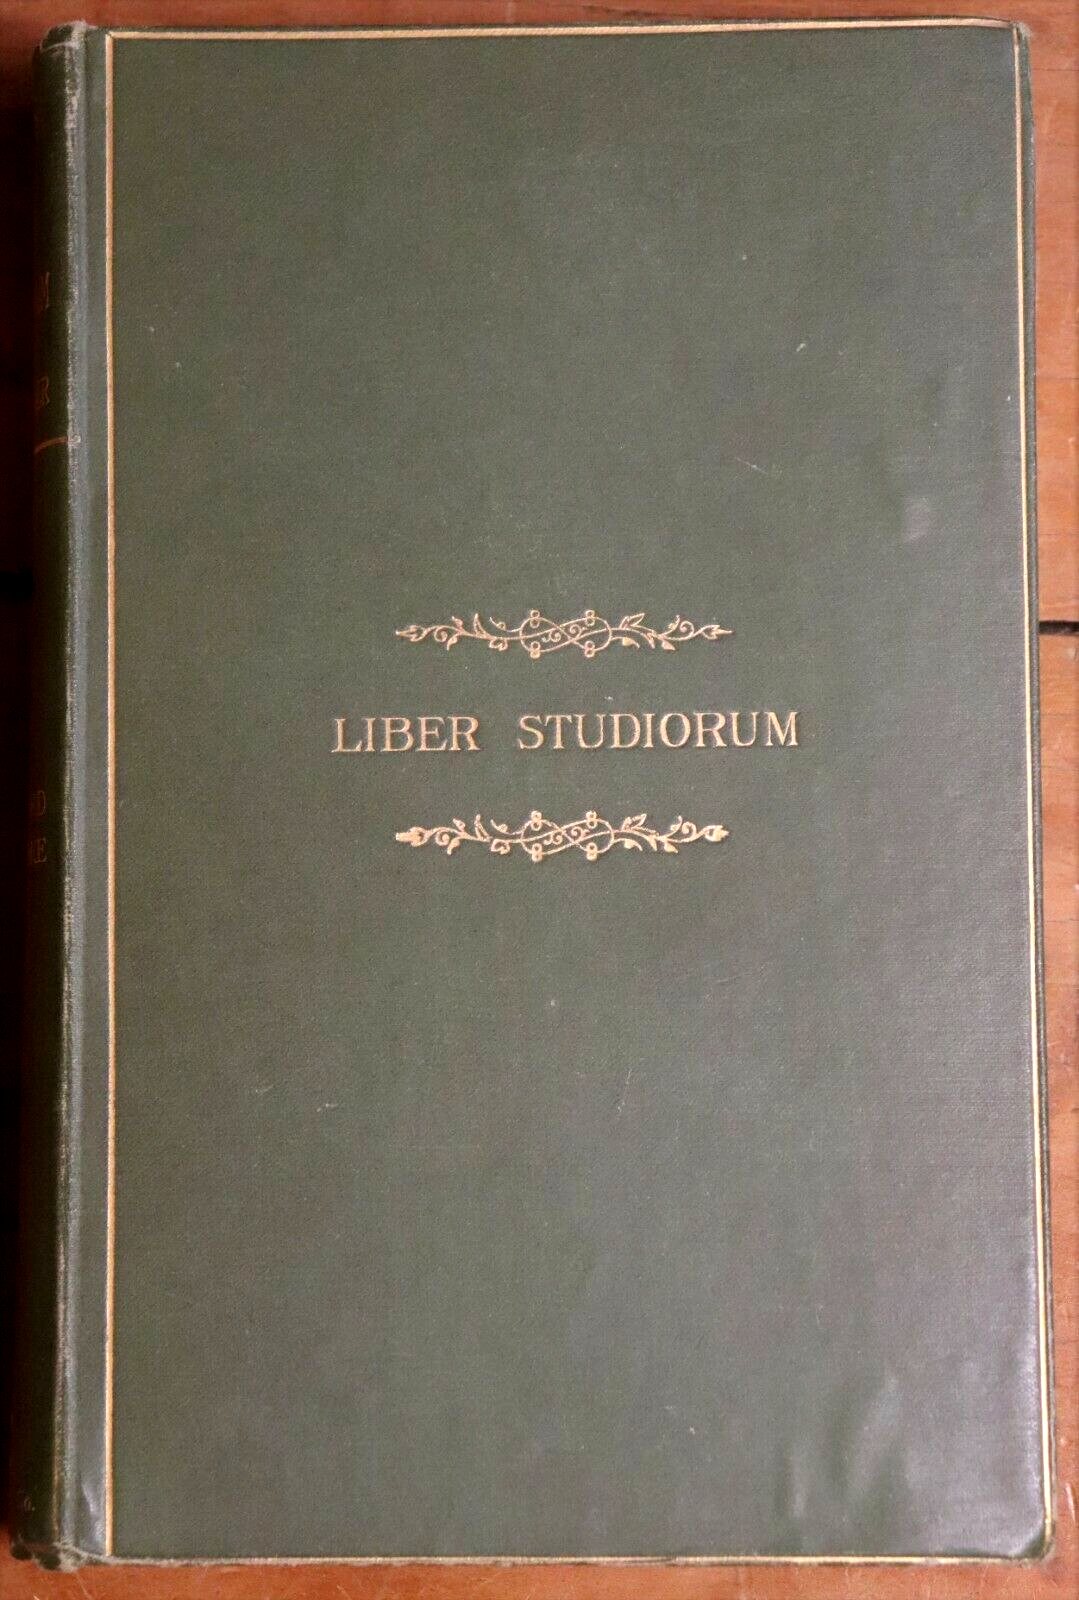 The Liber Studiorum of JMW Turner - 1885  - 1st Edition - Artist Book - 0